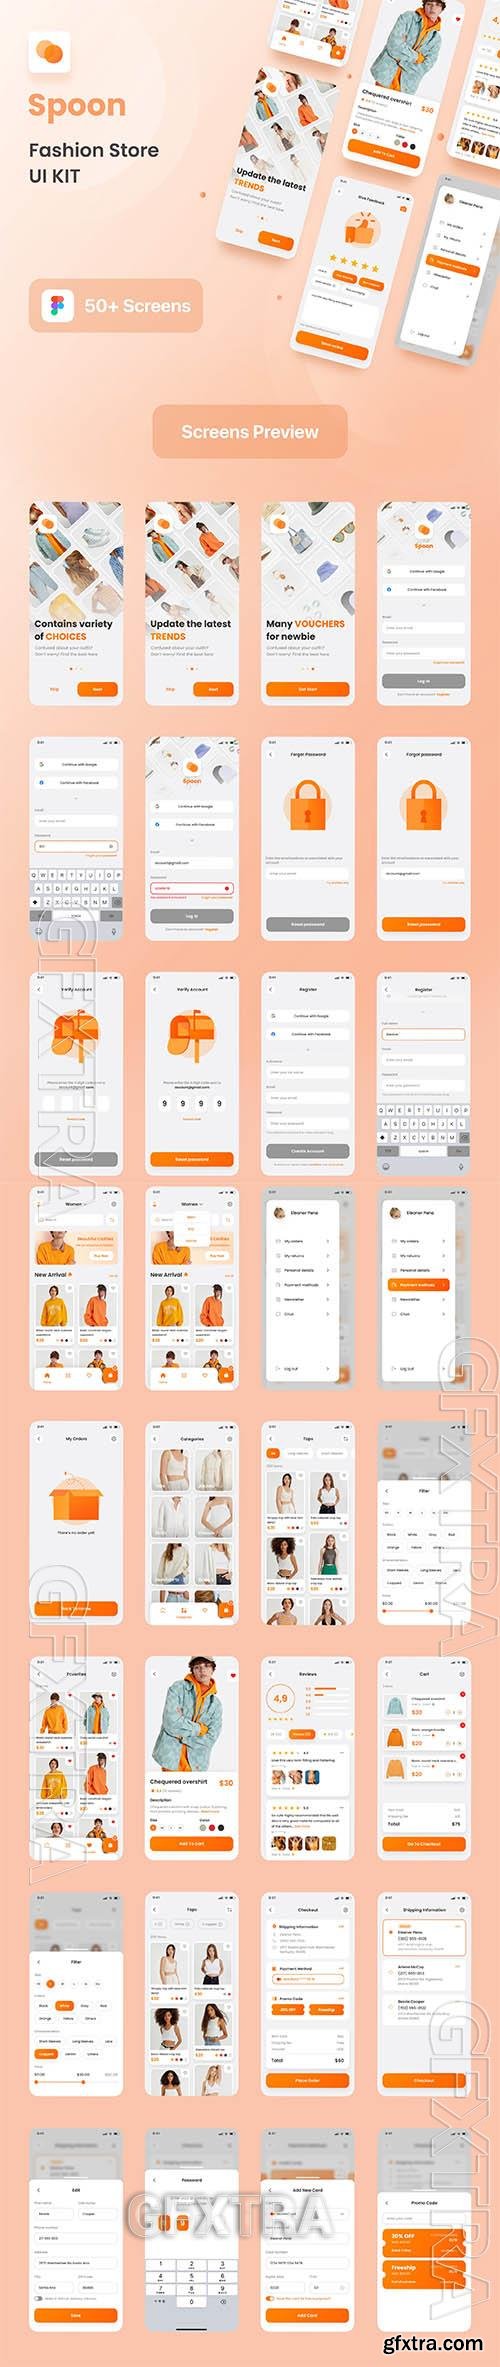 Spoon - Fashion Store UI Kit